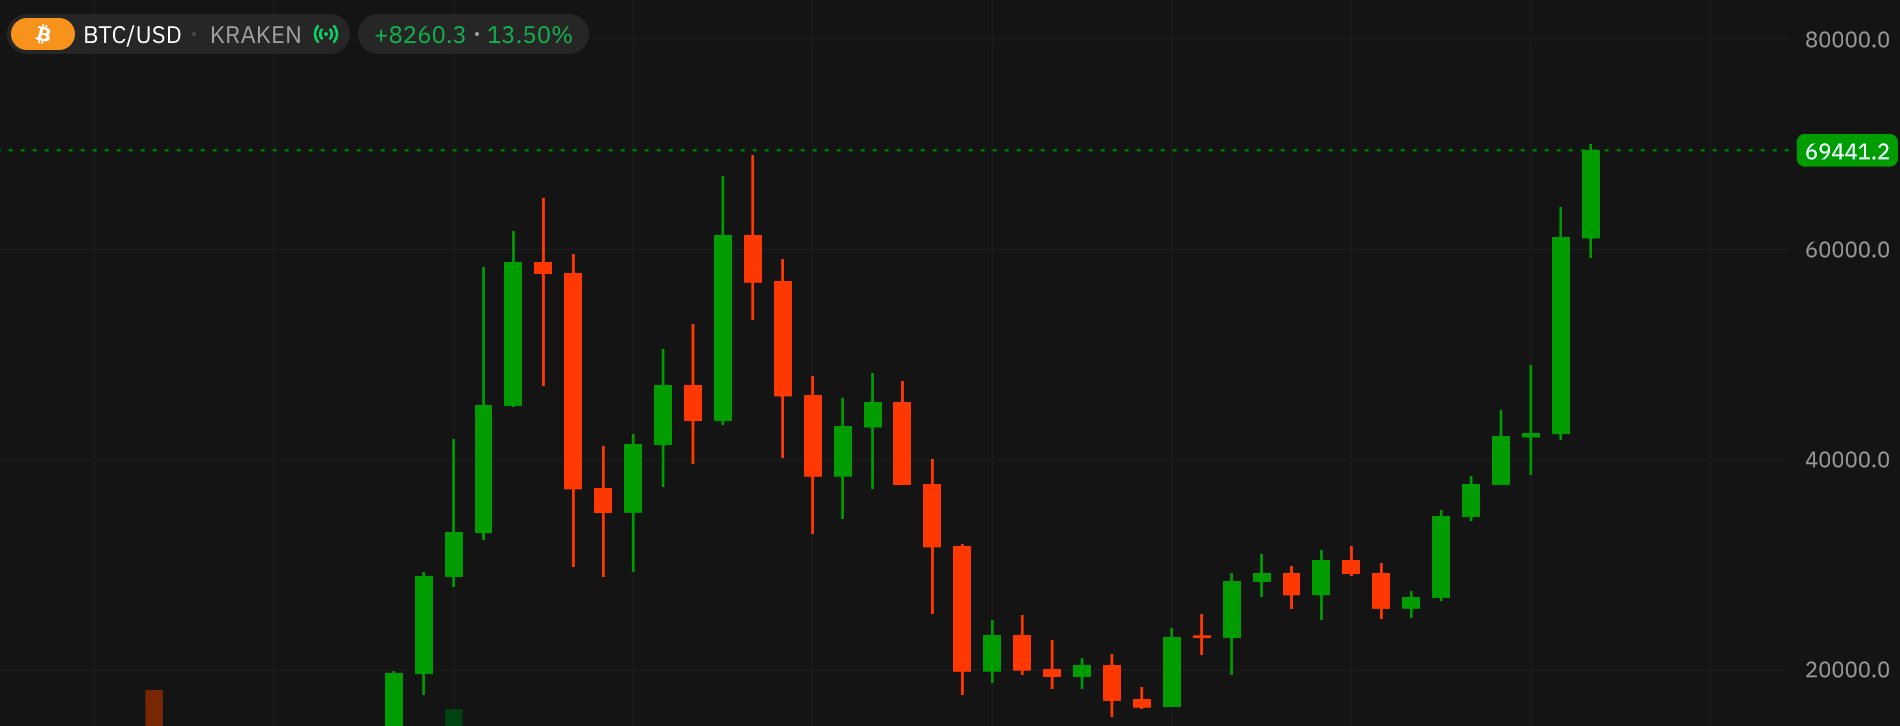 Bitcoin all-time high chart